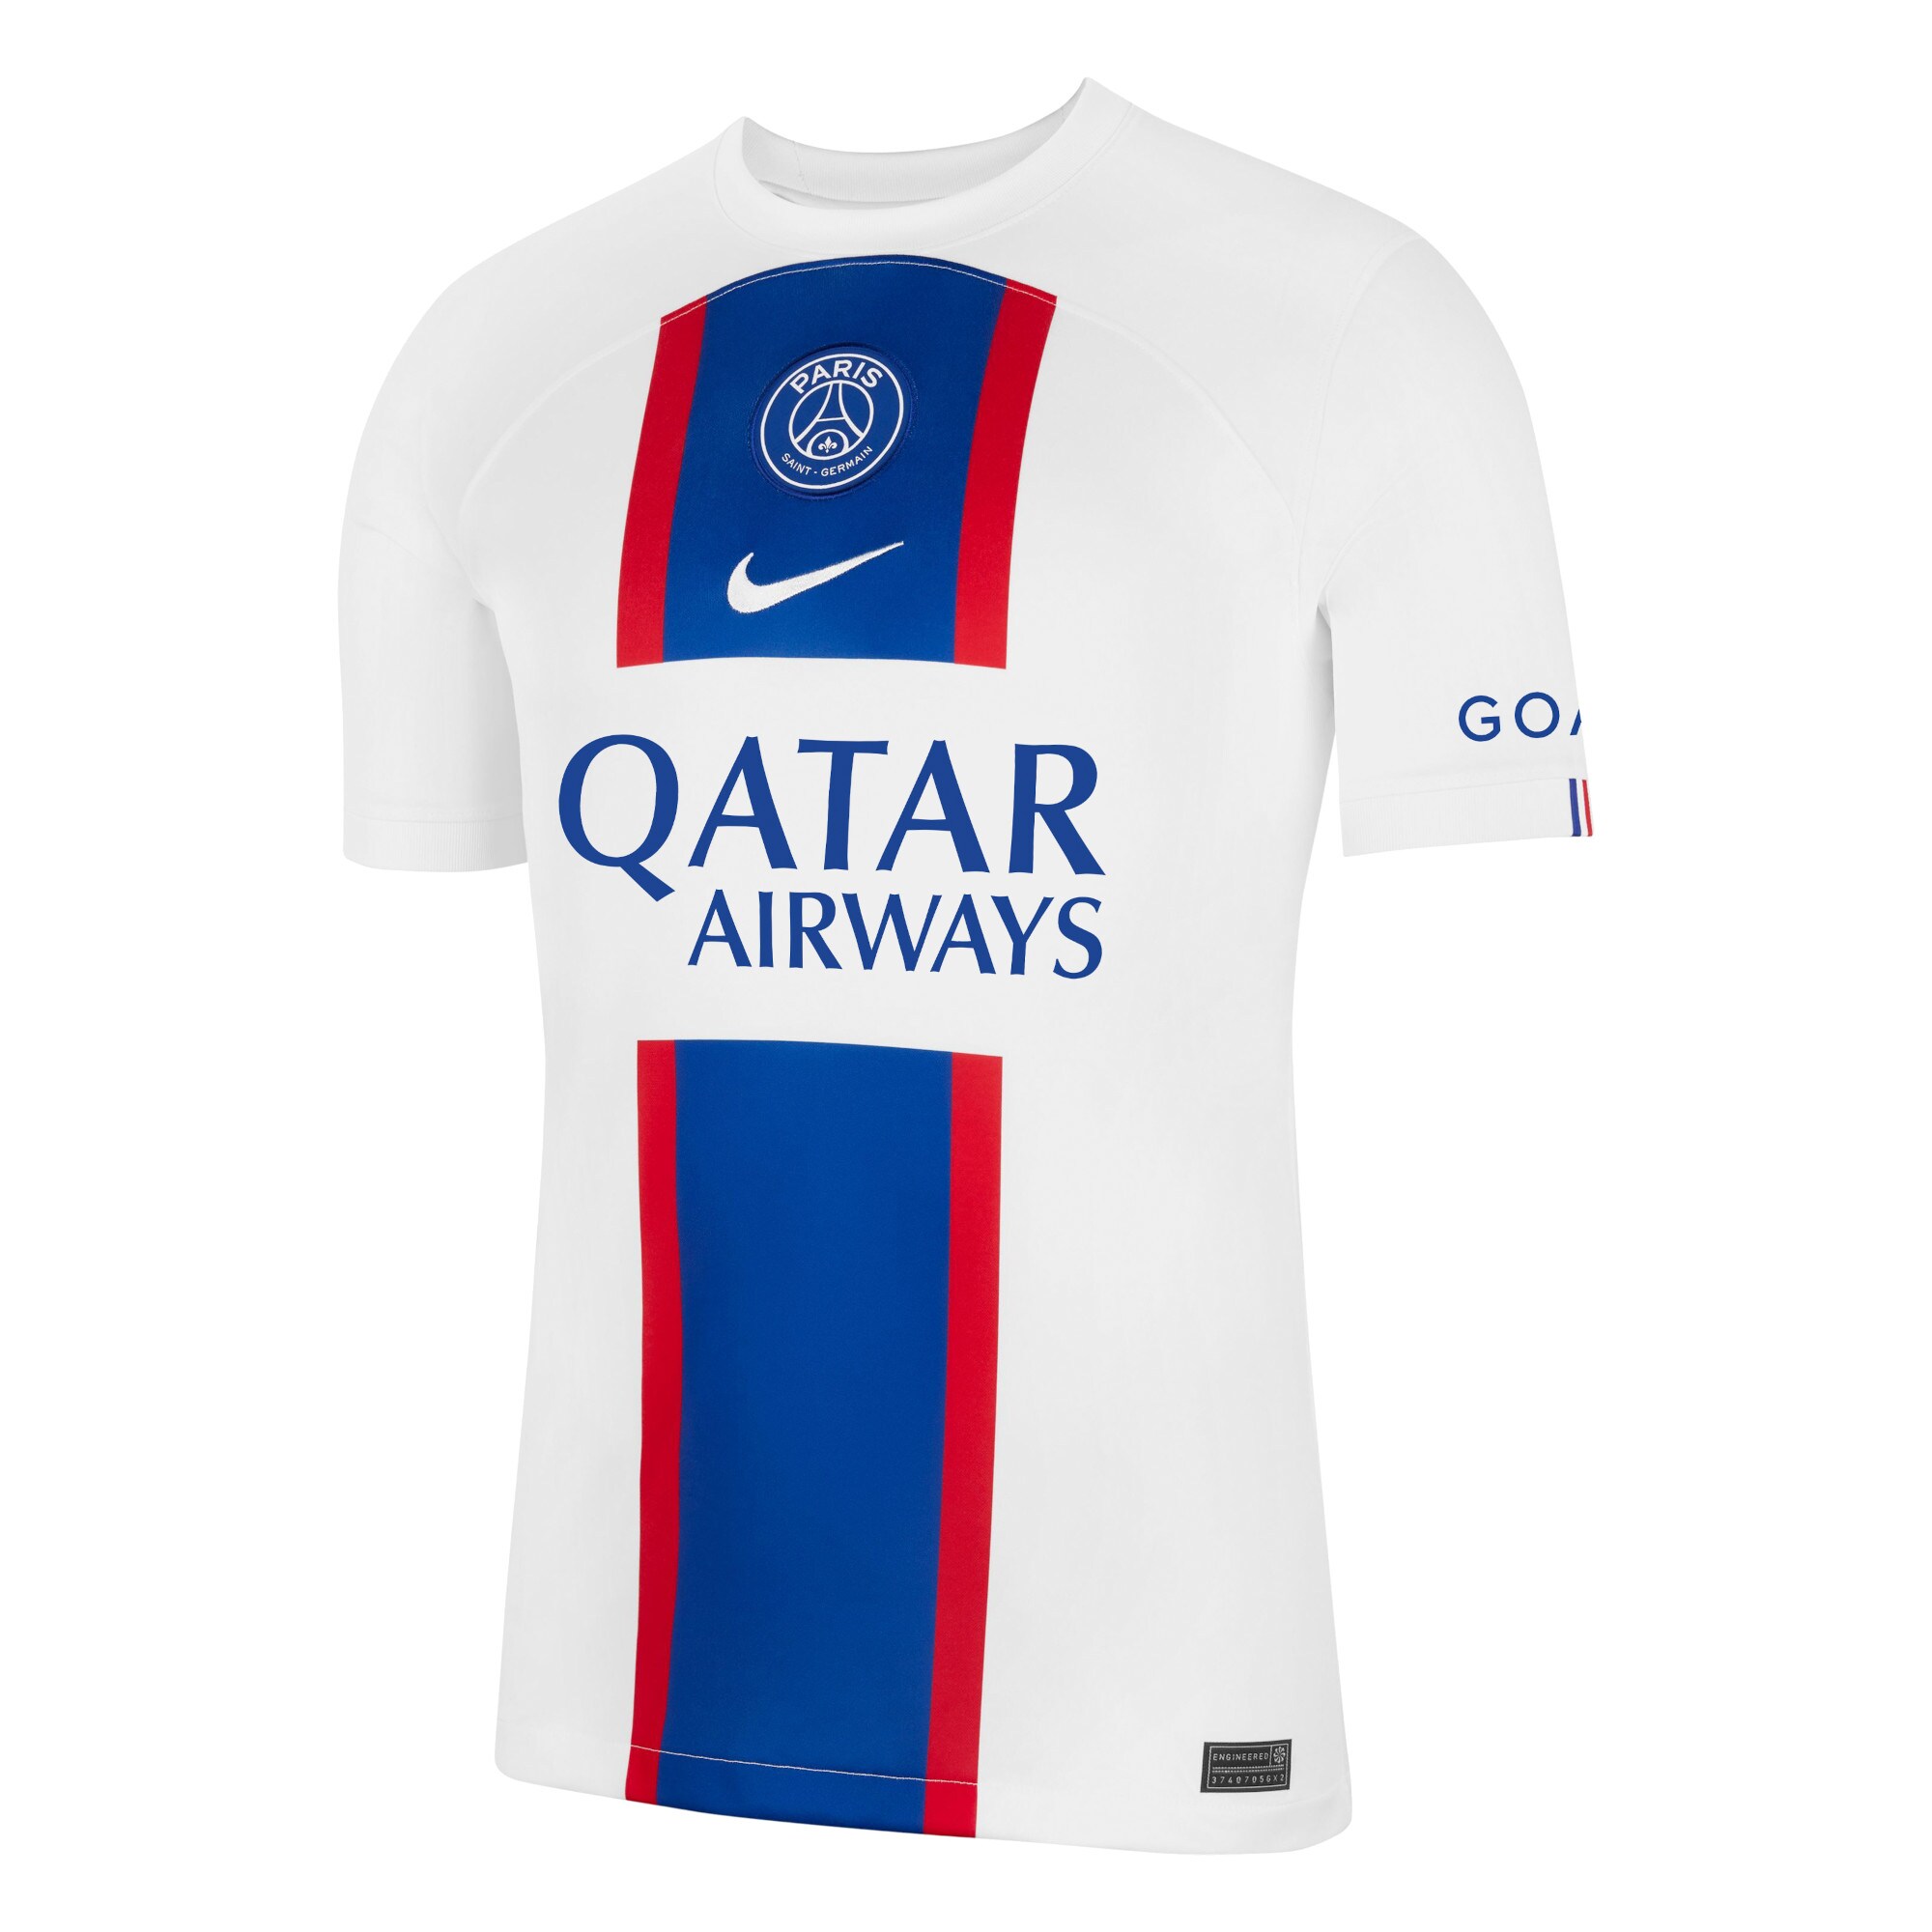 Paris Saint-Germain Third Stadium Shirt 2022-23 with Kimpembe 3 printing